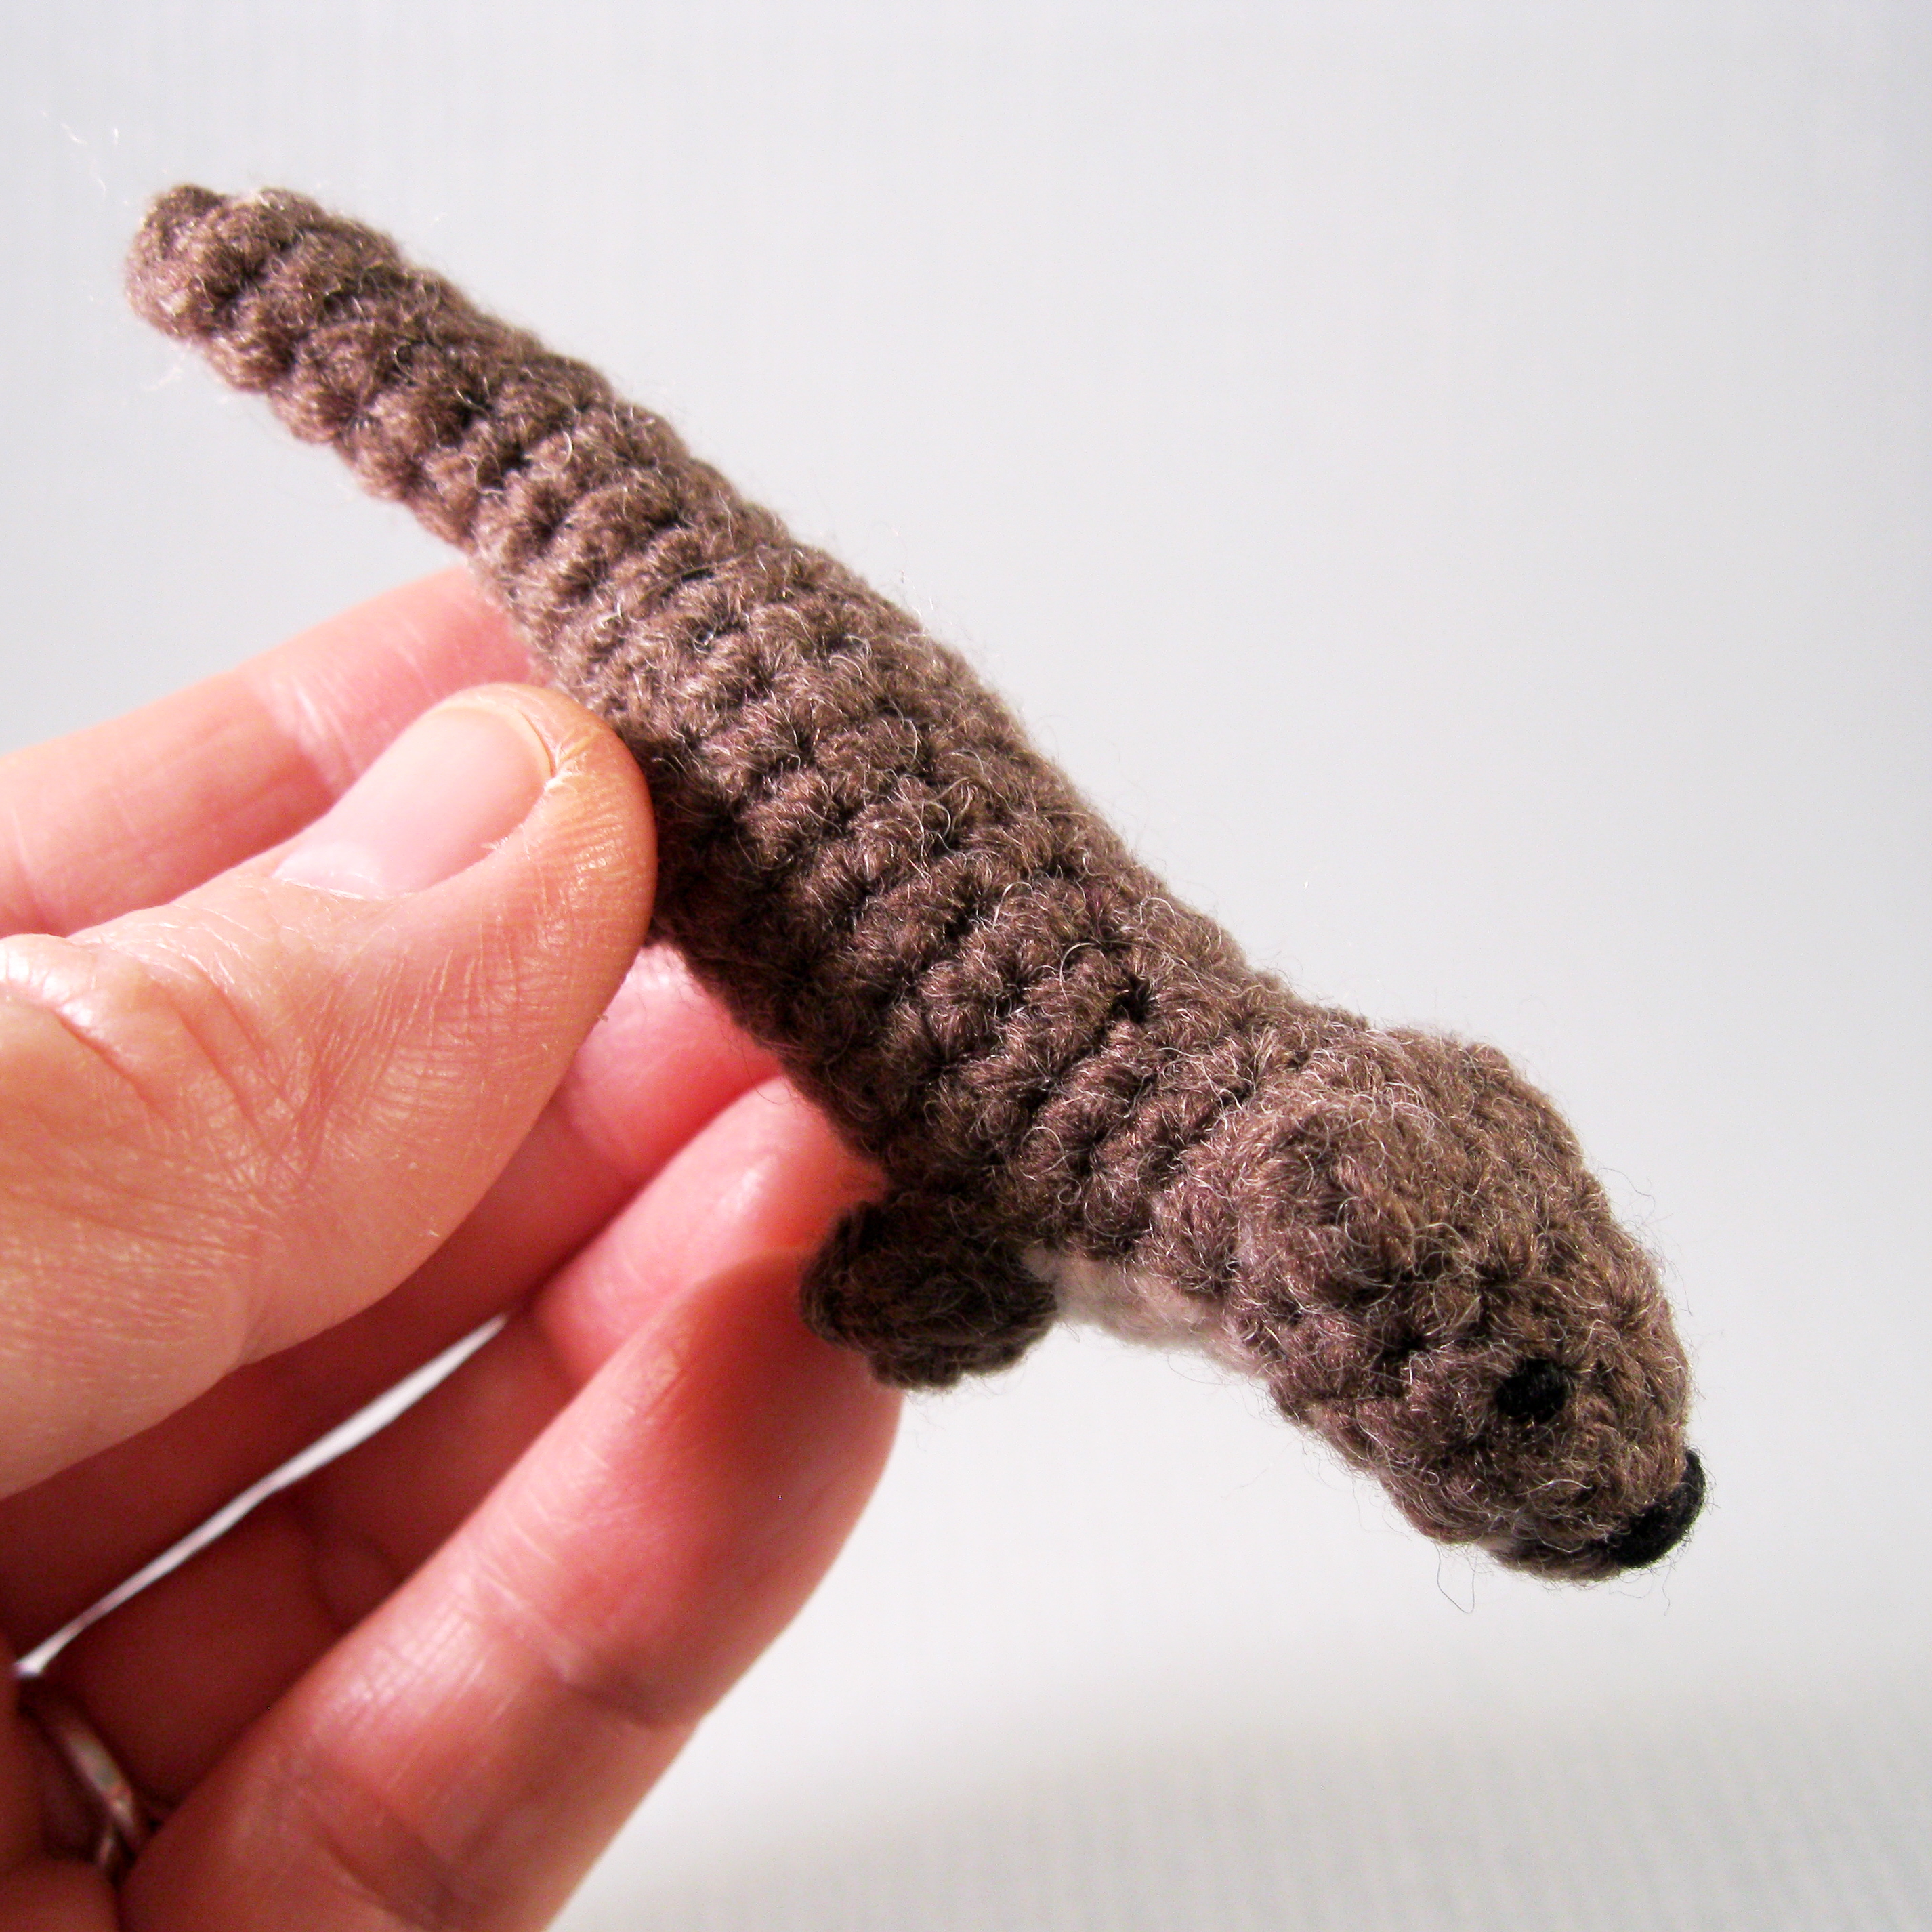 LucyRavenscar - Crochet Creatures: Tiny Woodland Animal Amigurumi